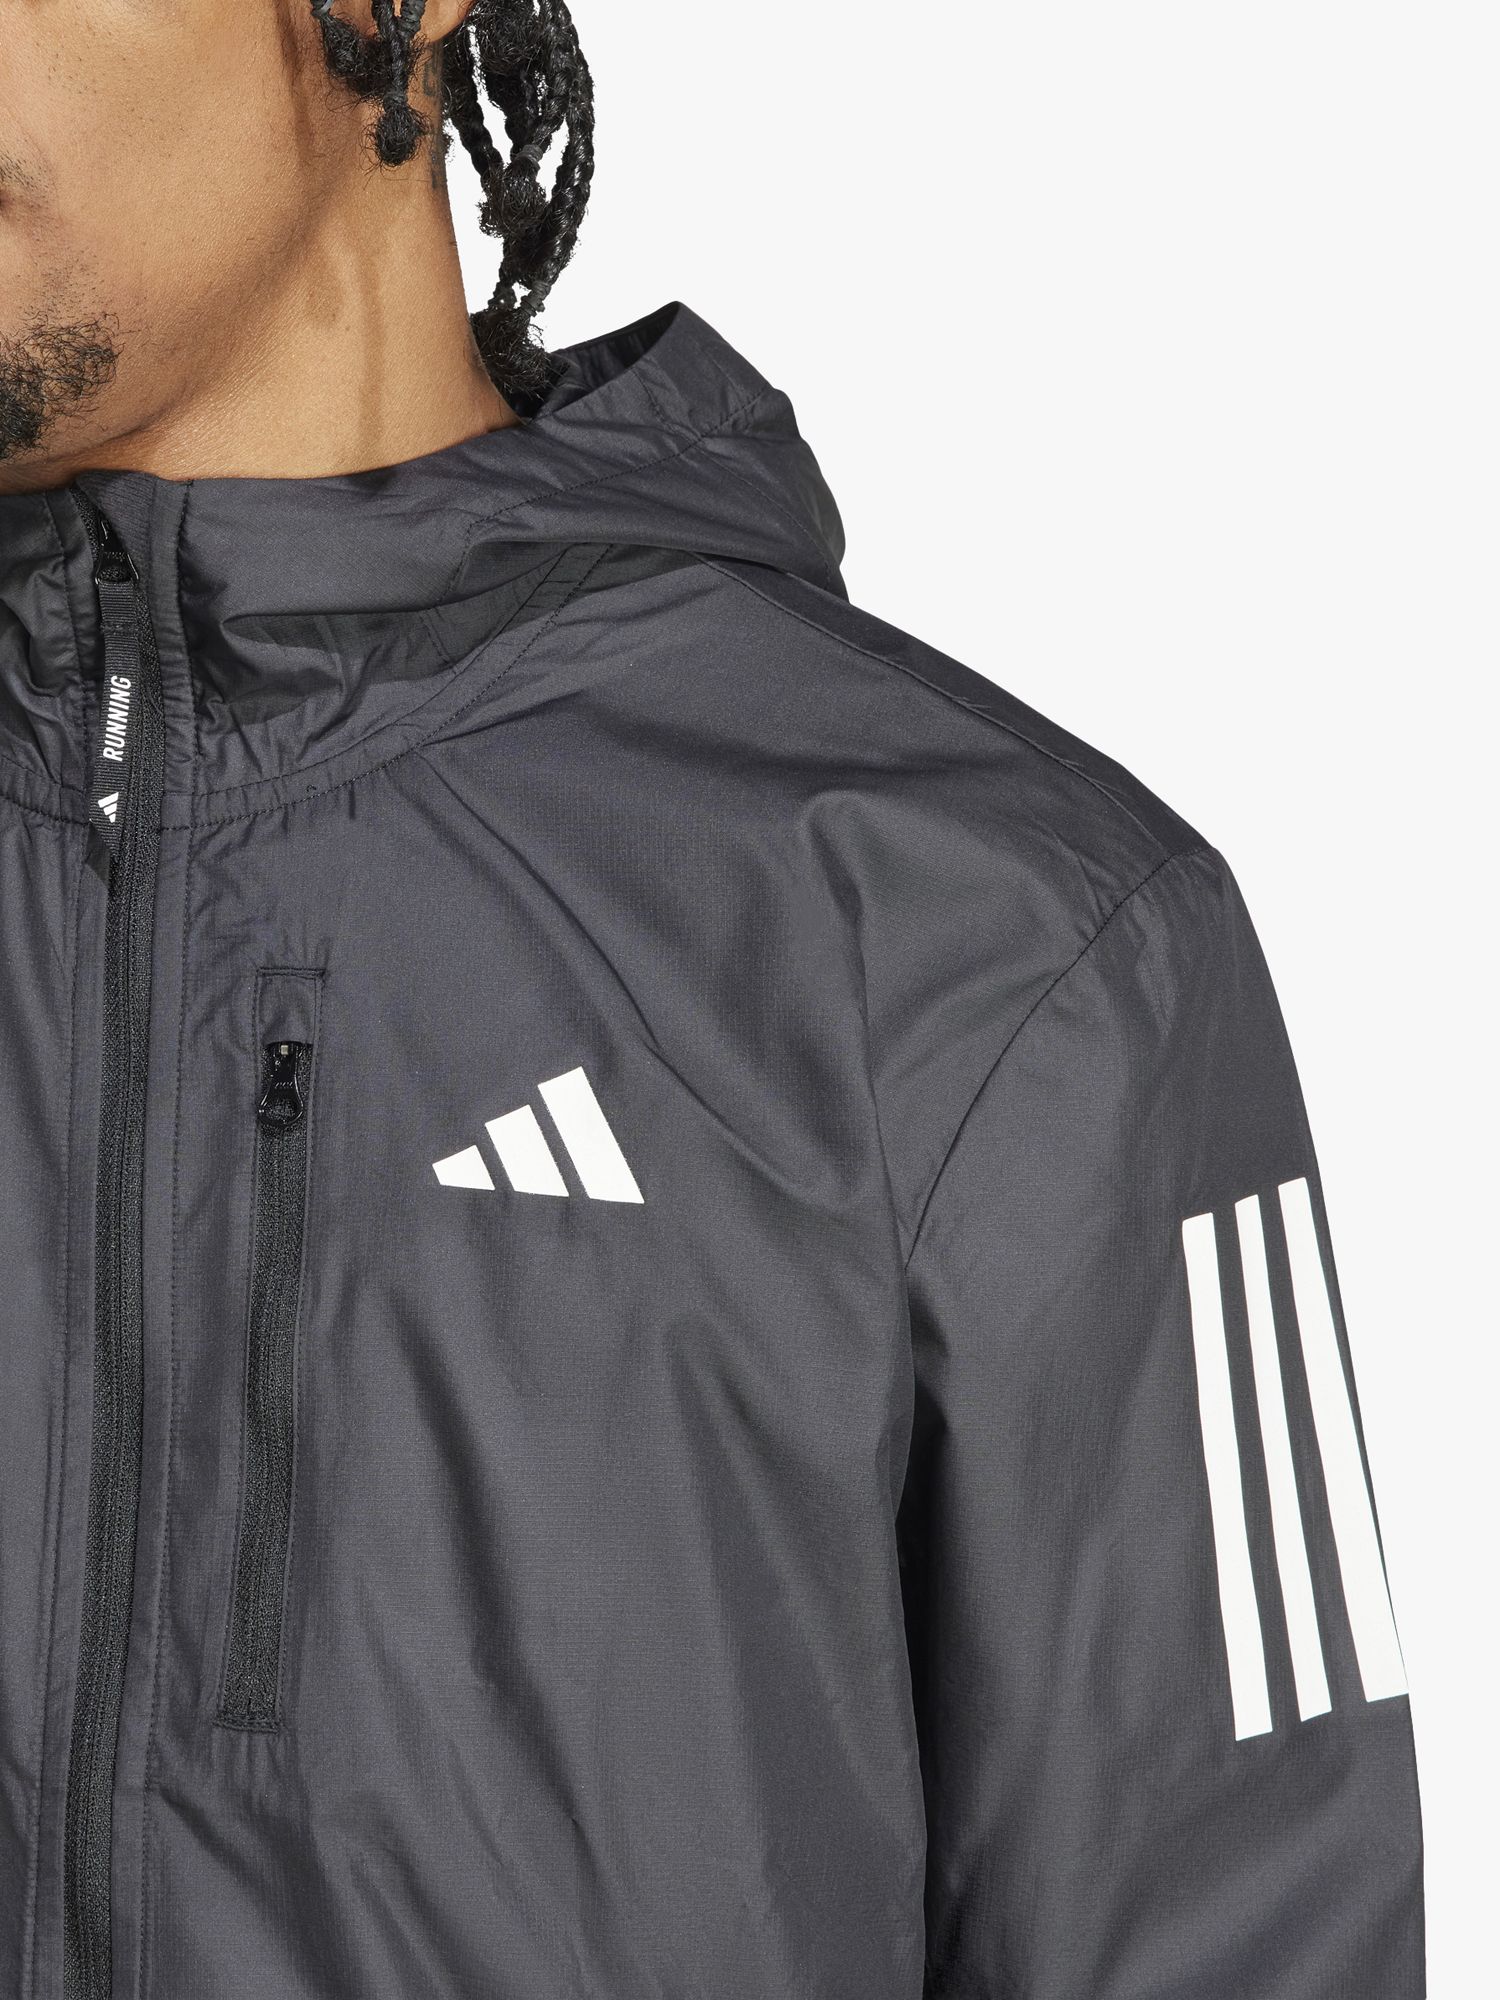 adidas Own The Run Men's Running Jacket, Black, XL